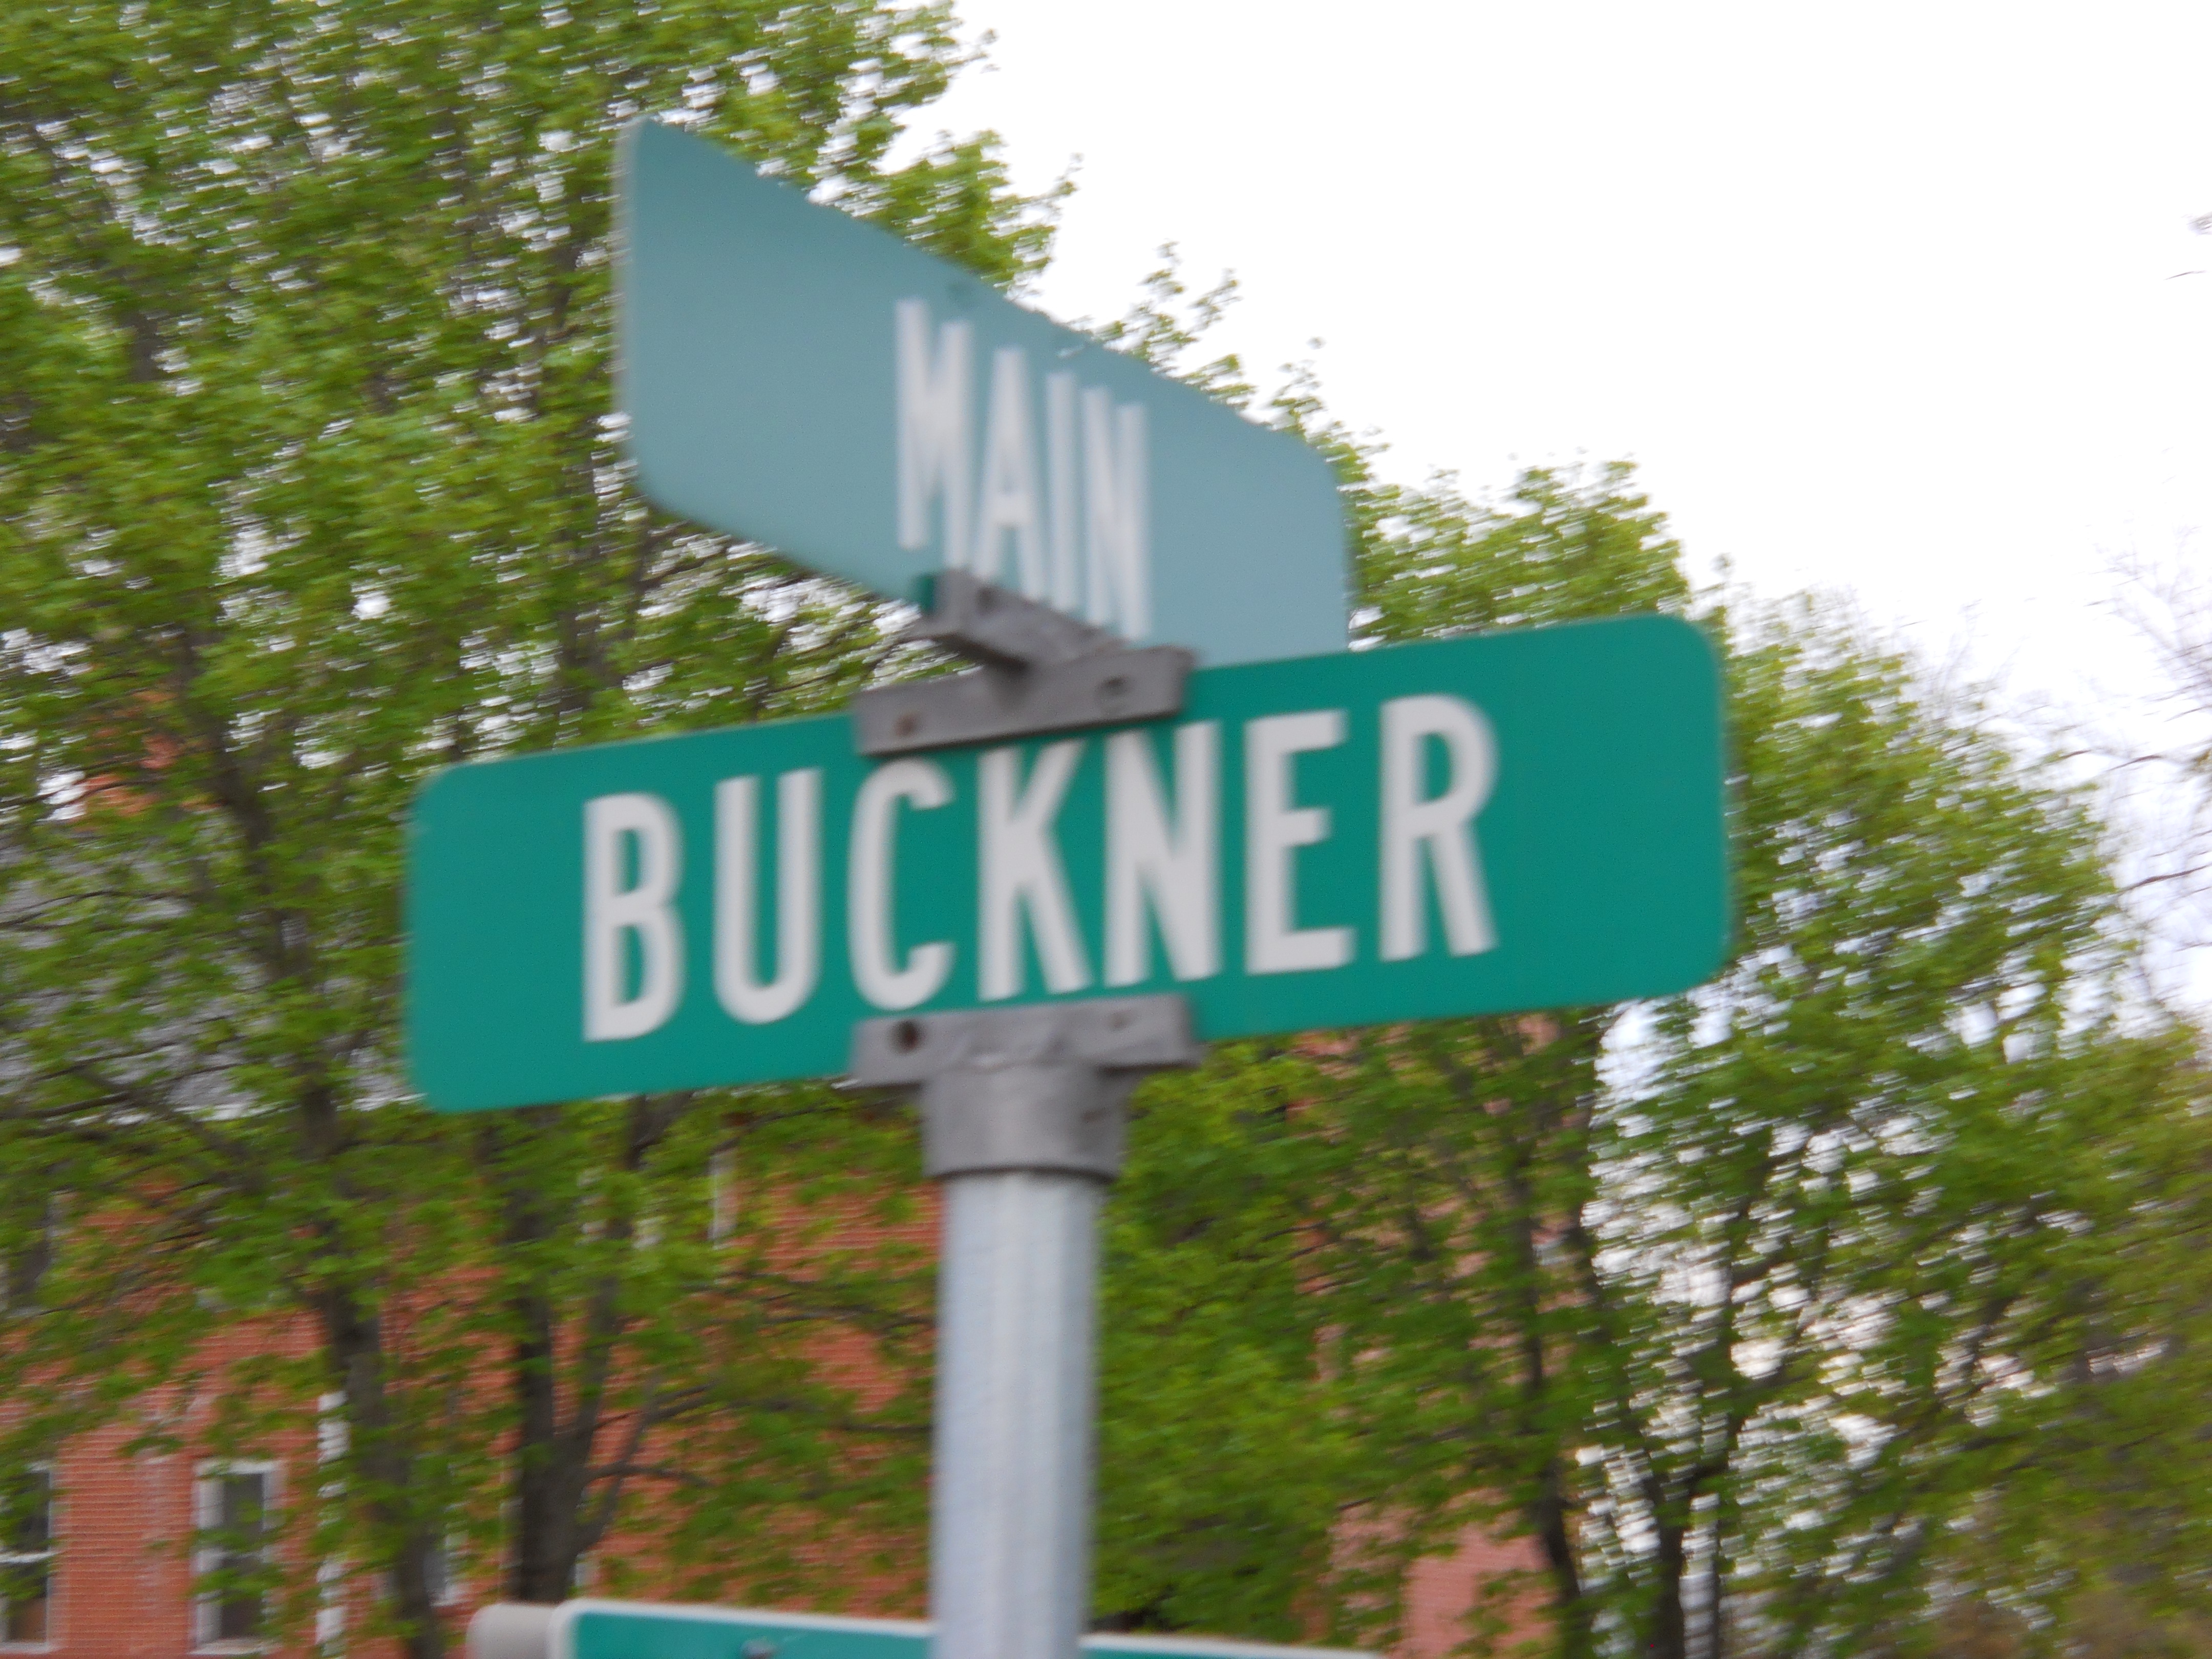 Corner of Main and Buckner.  Buckner street is named in memory of Mayo Hazeltine Buckner.